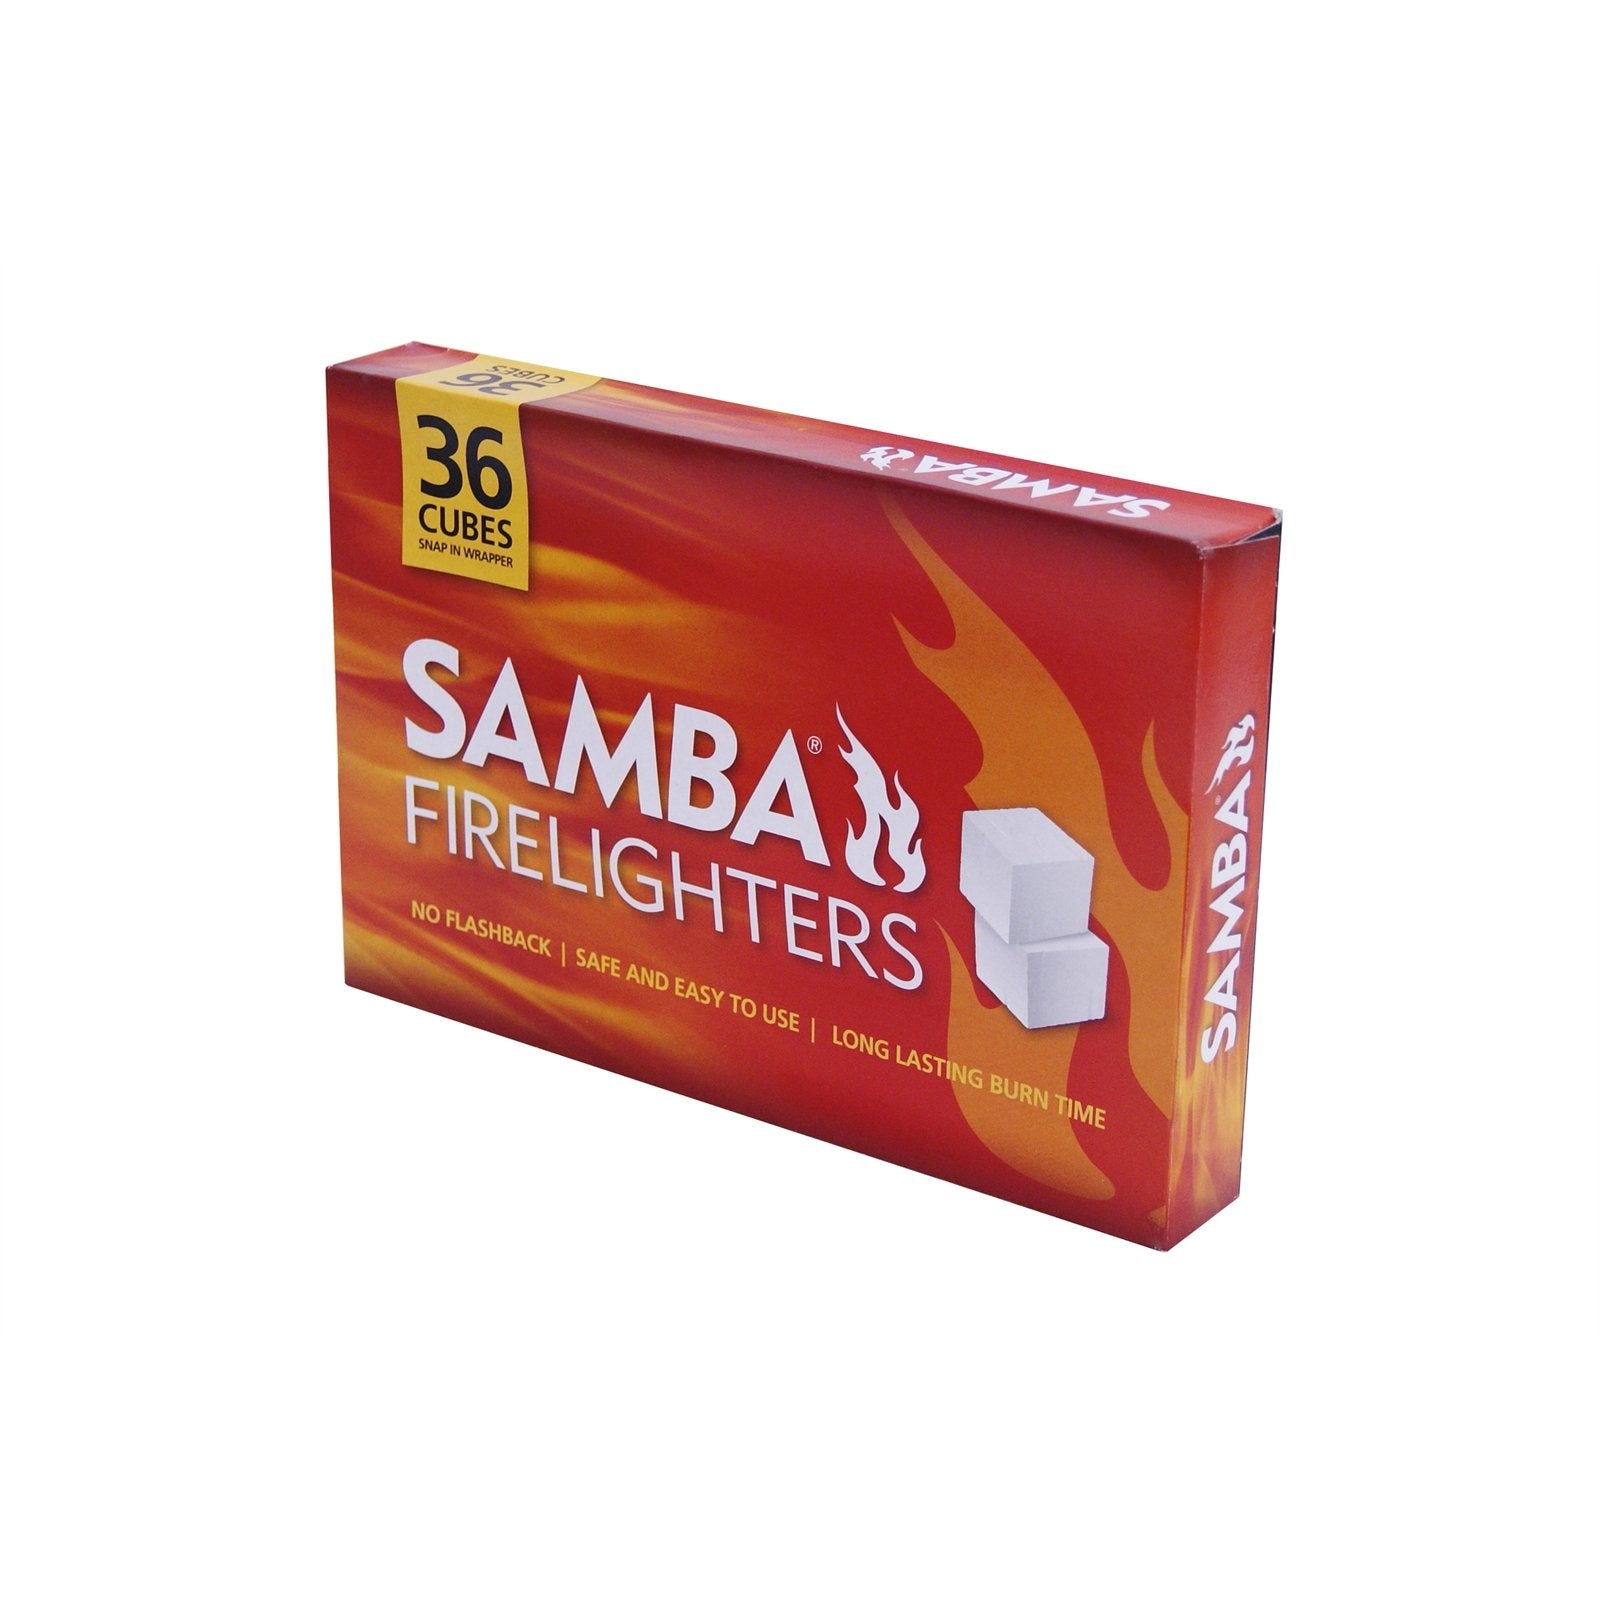 Samba Firelighters 36 Cubes